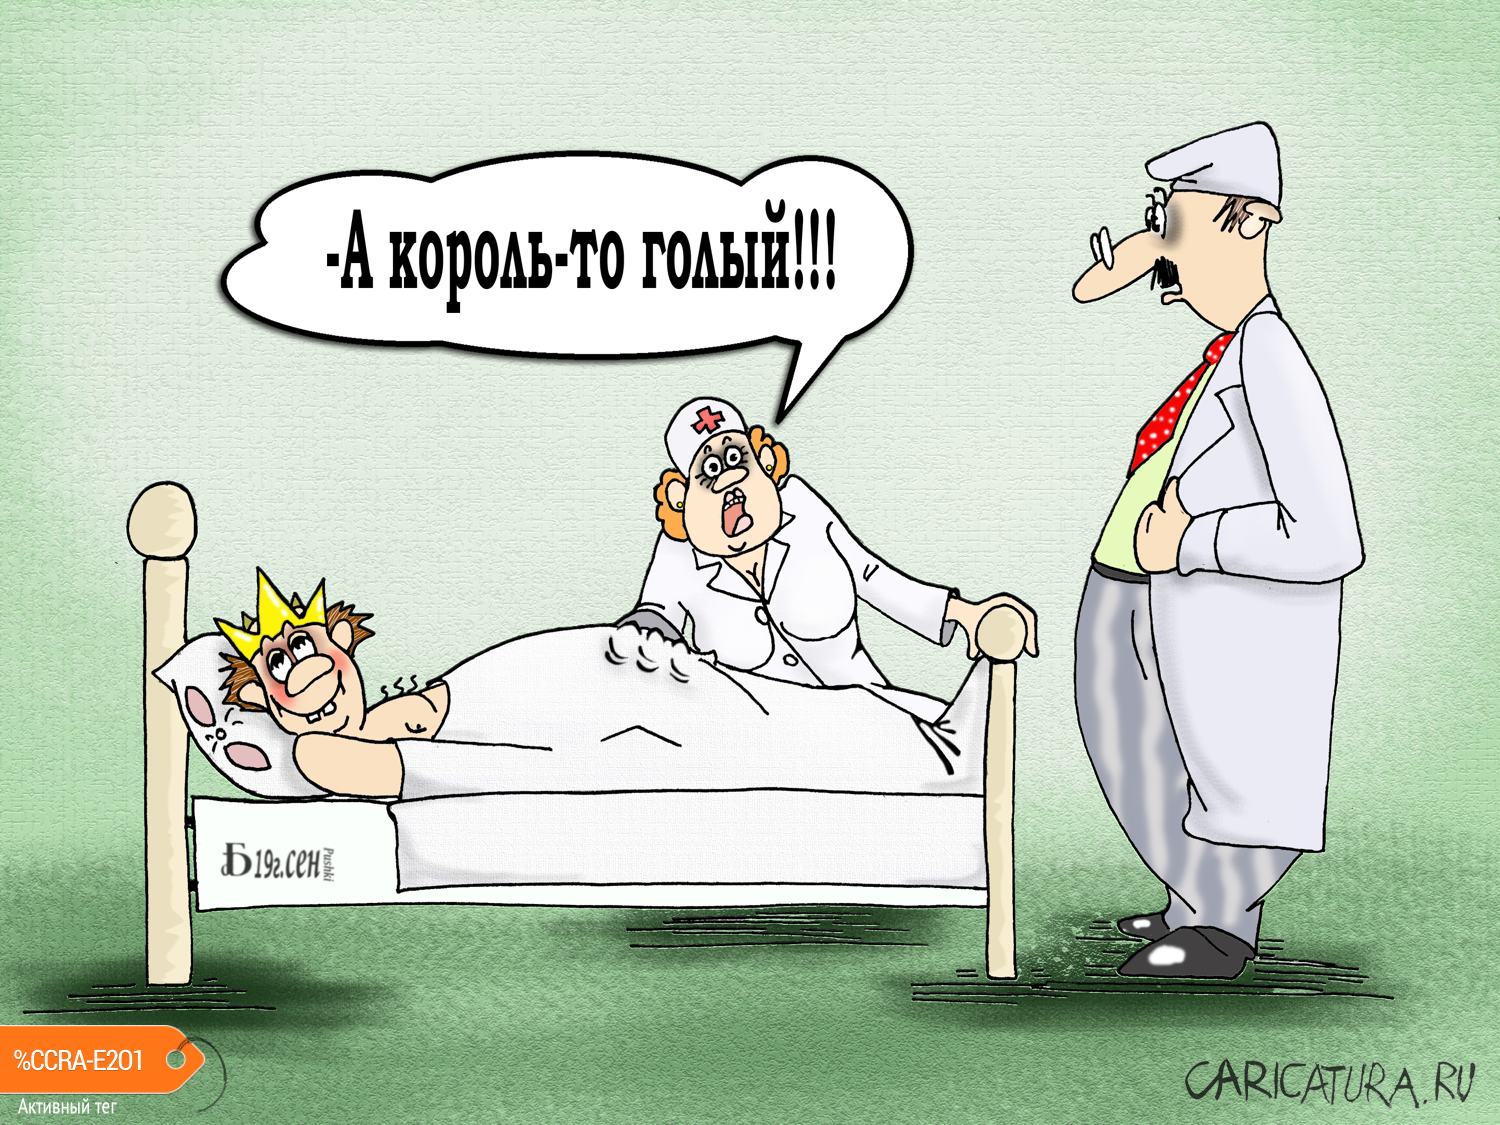 Карикатура "Про голотьбу", Борис Демин